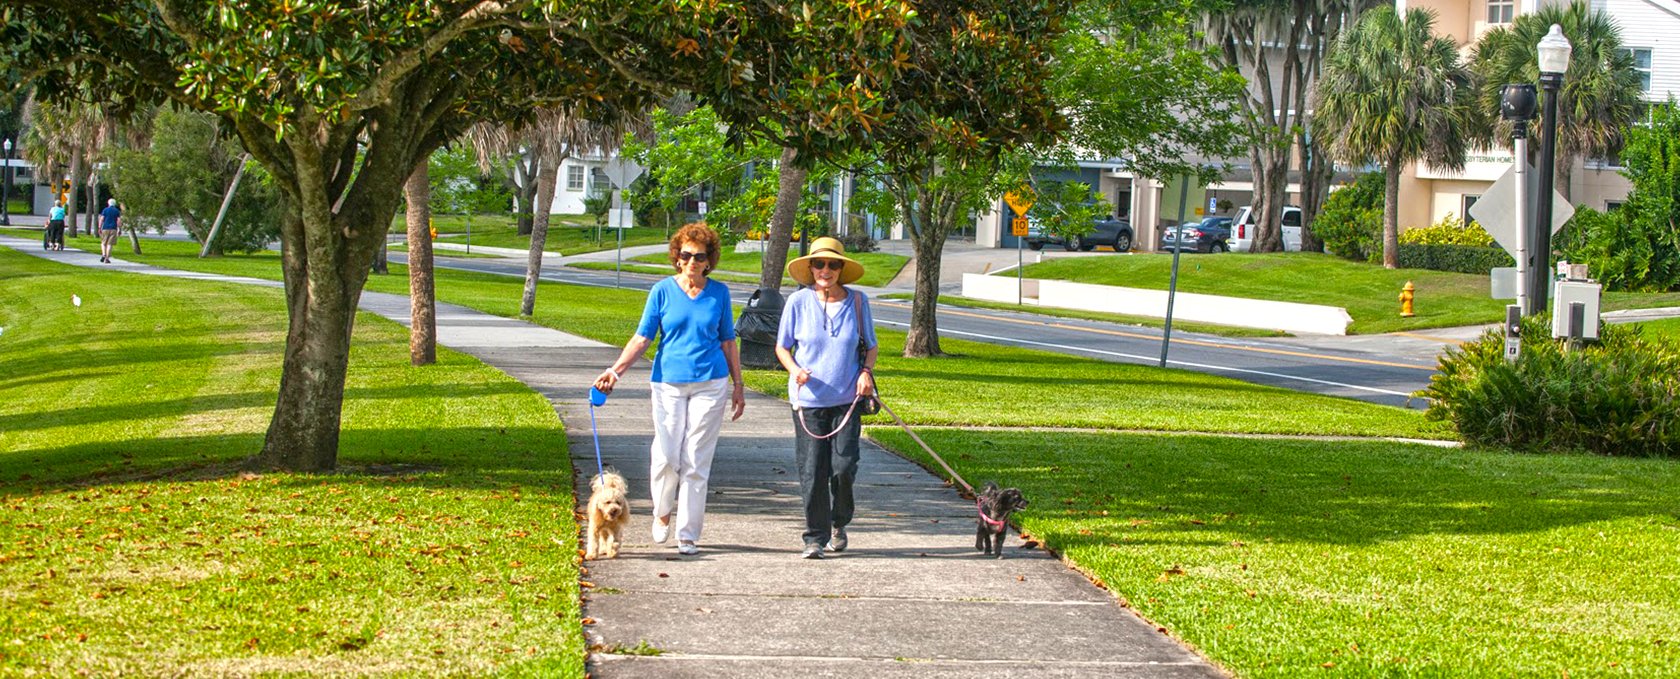 Residents walking dogs